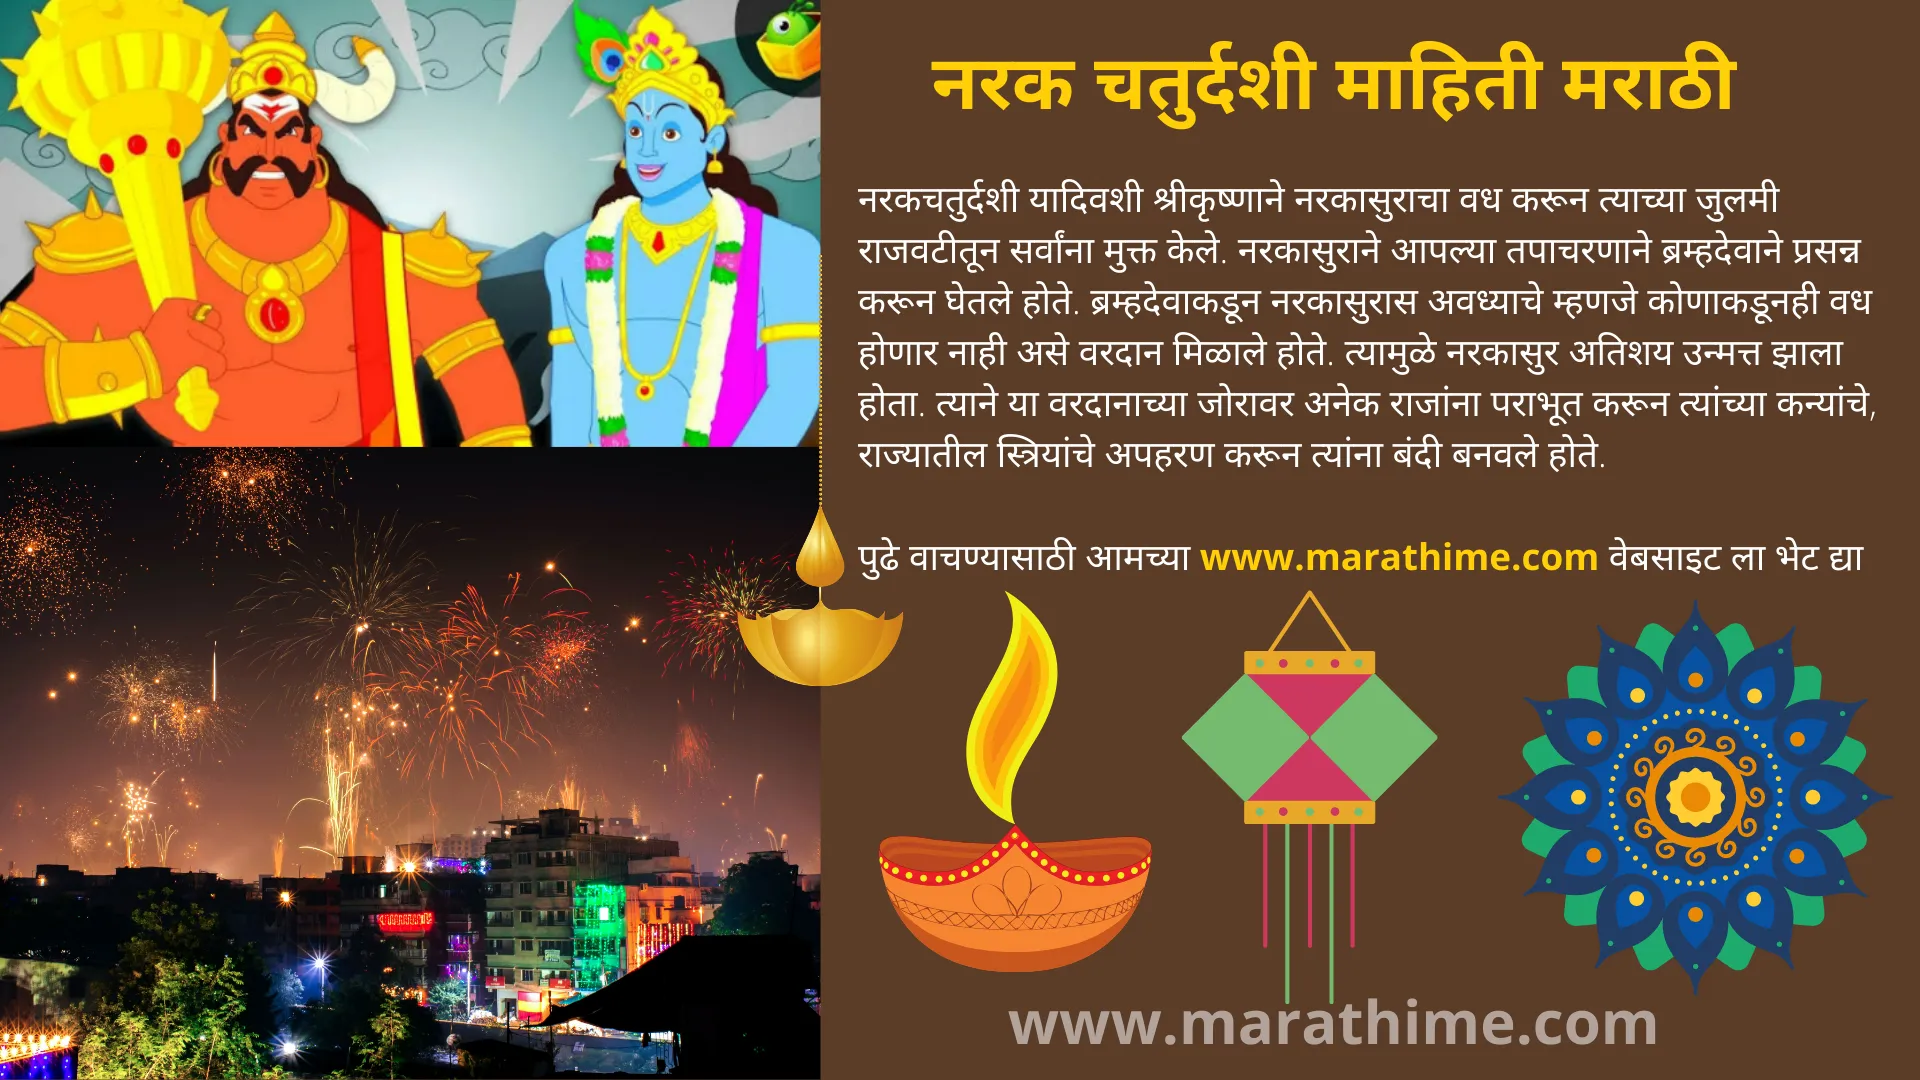 नरक चतुर्दशी मराठी माहिती-Narak Chaturdashi Information in Marathi